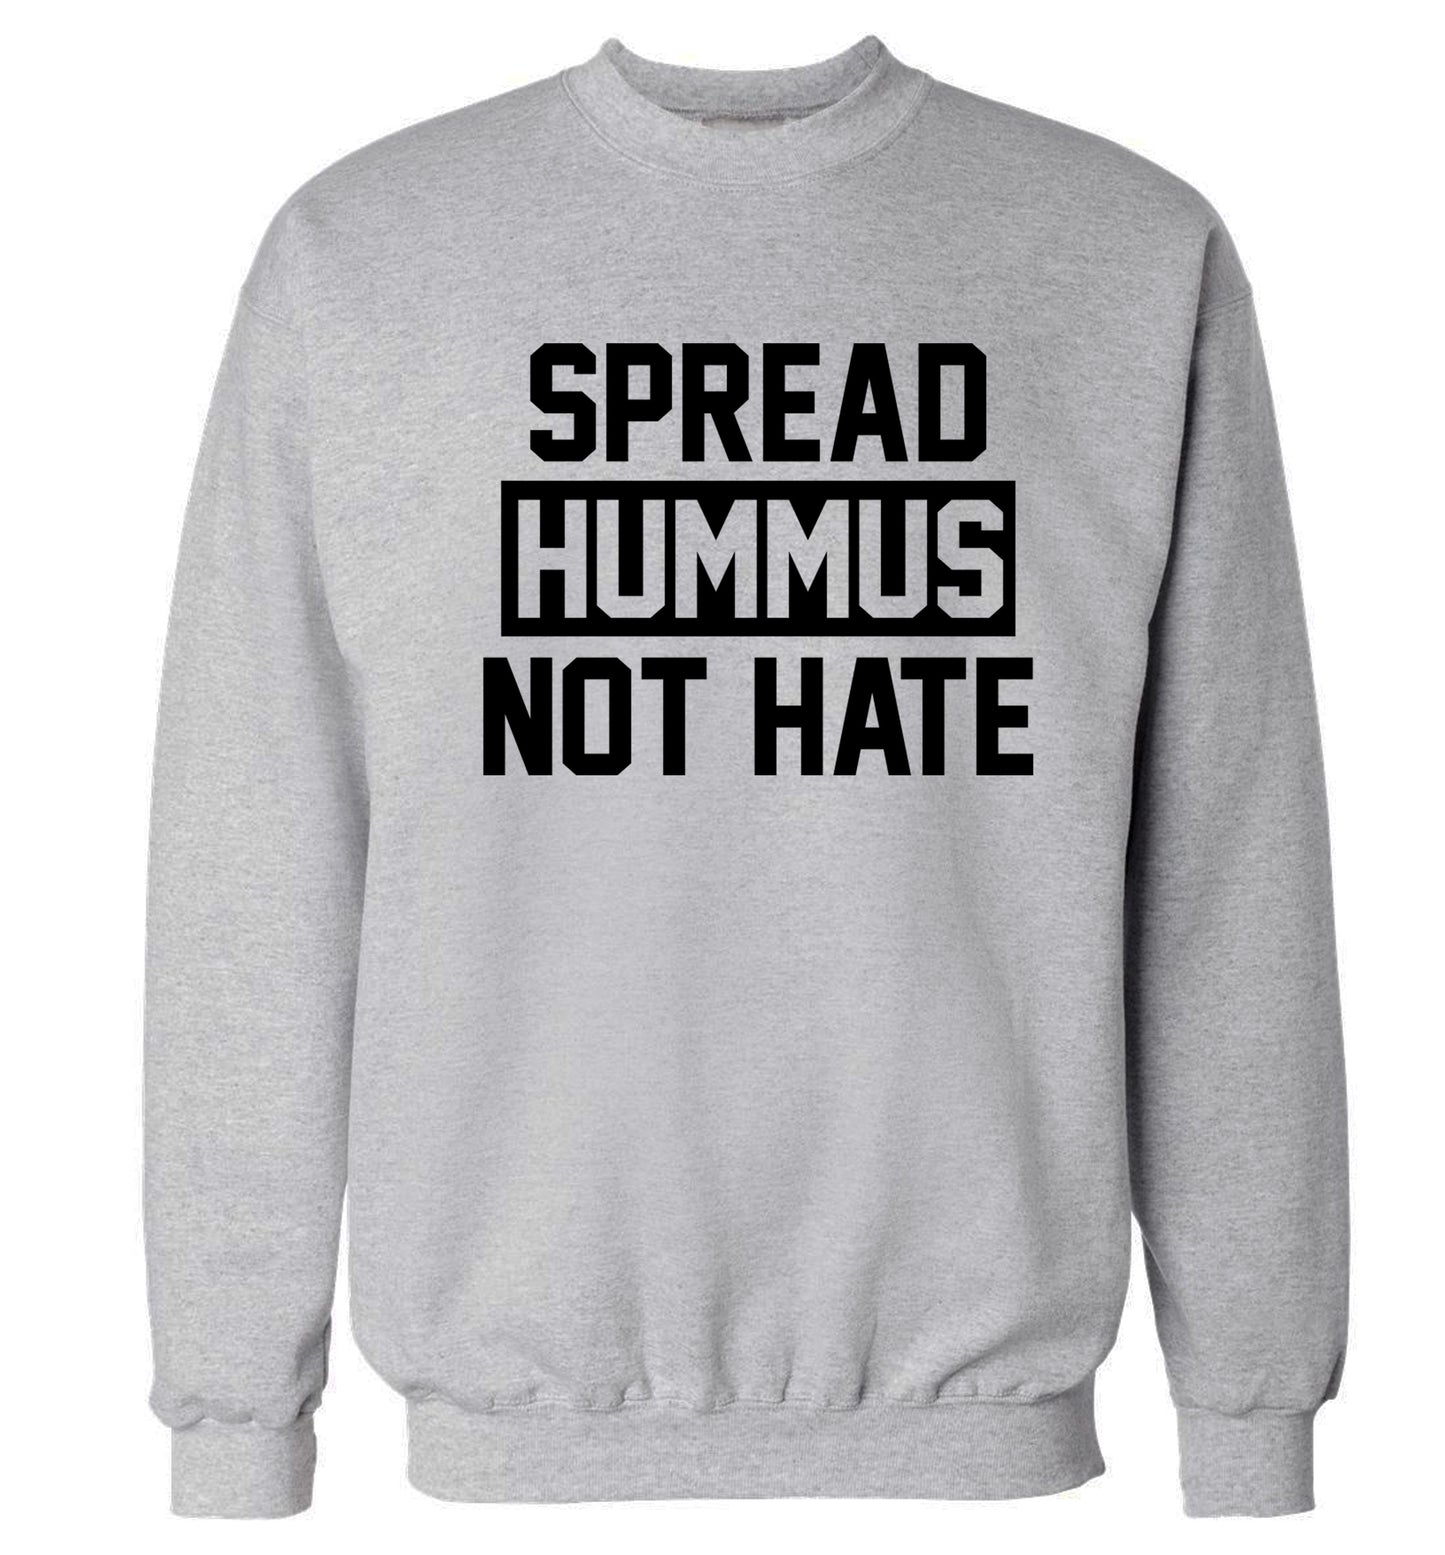 Spread hummus not hate Adult's unisex grey Sweater 2XL